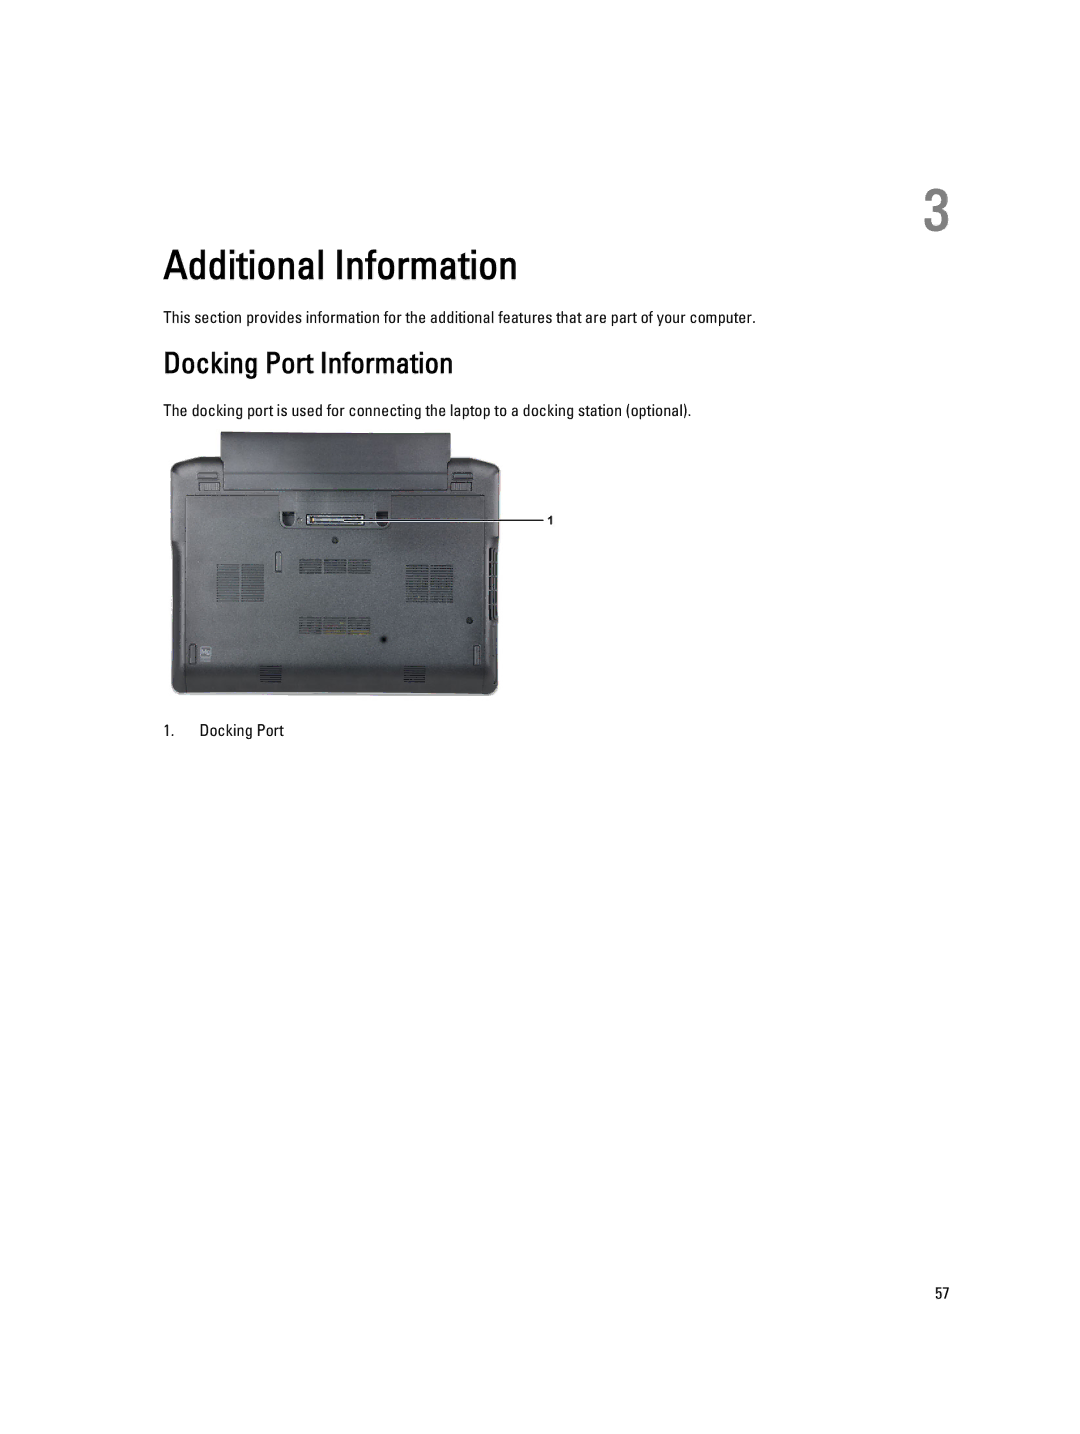 Dell E6230 owner manual Additional Information, Docking Port Information 